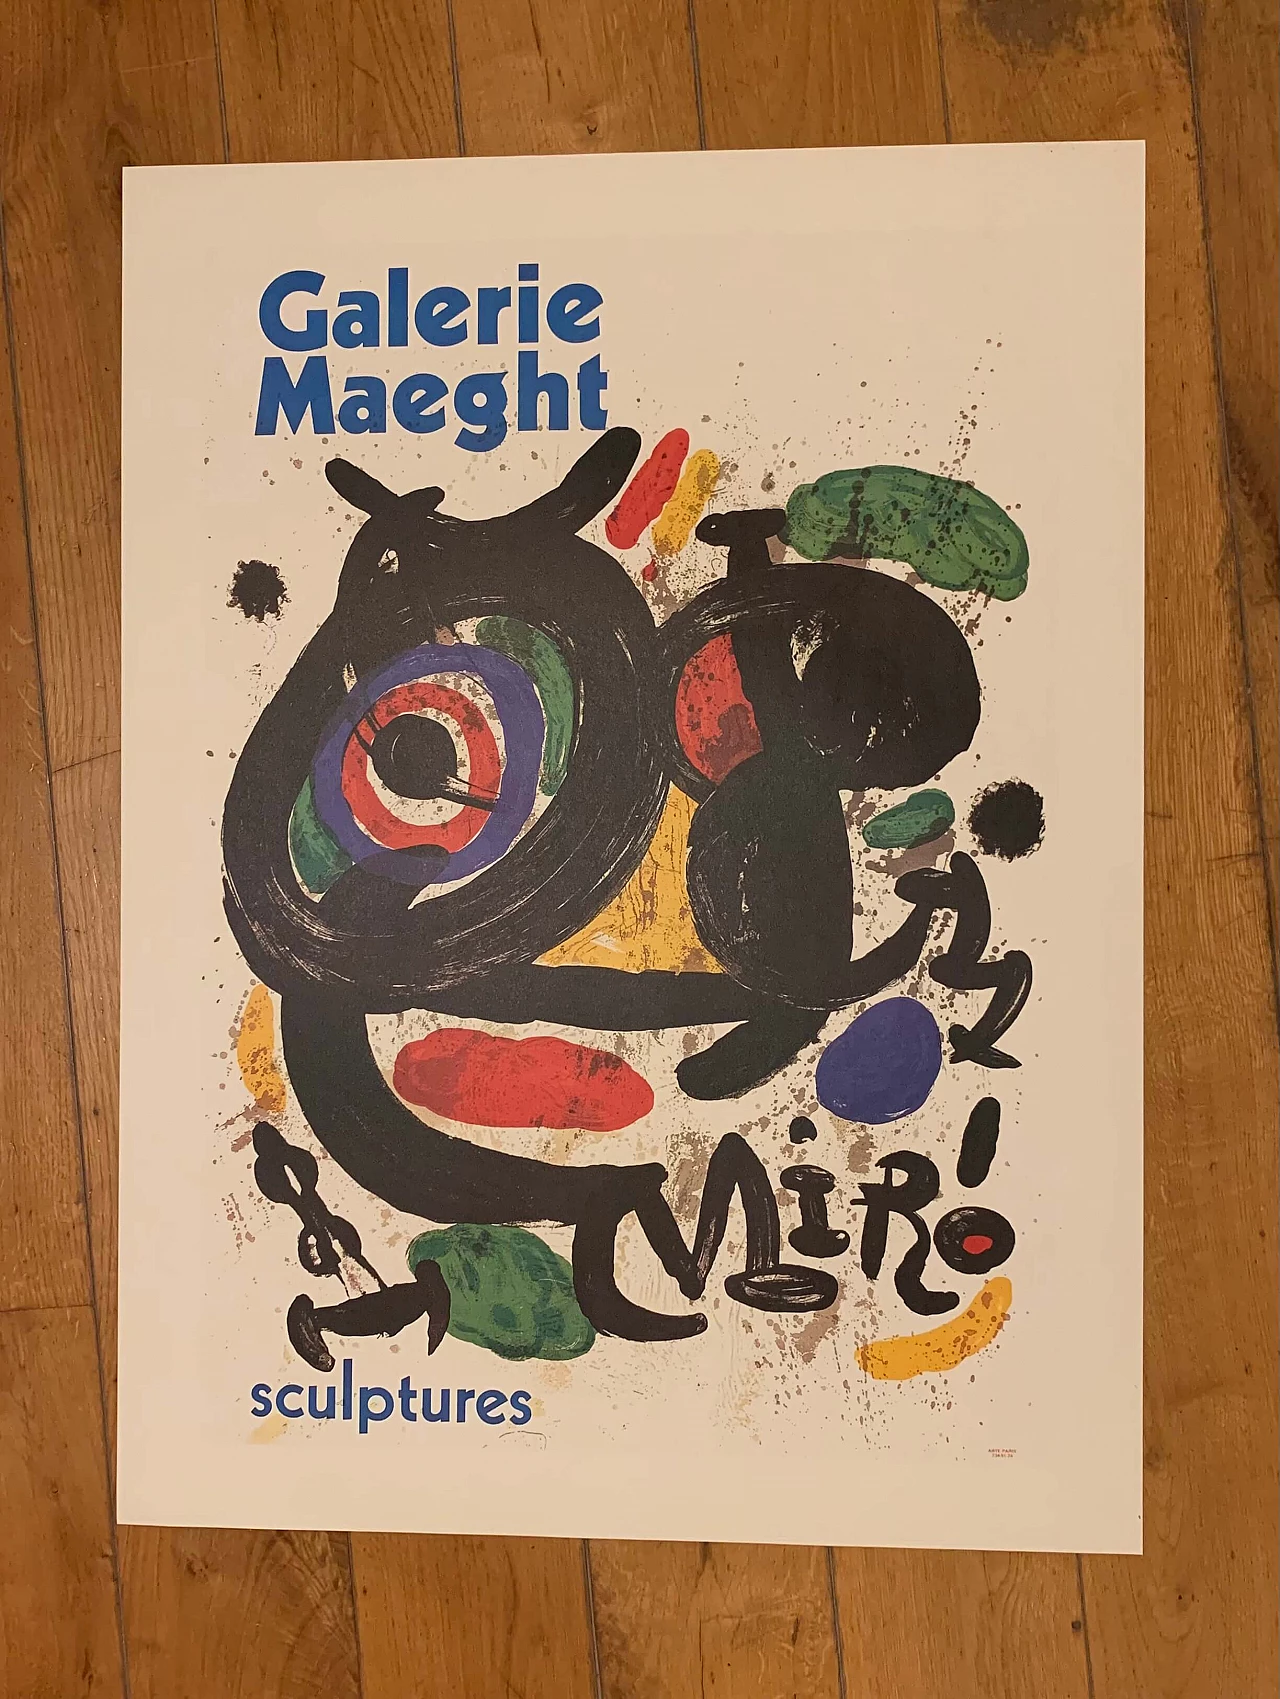 Manifesto per mostra di Joan Miró alla Galerie Maeght, anni '70 3